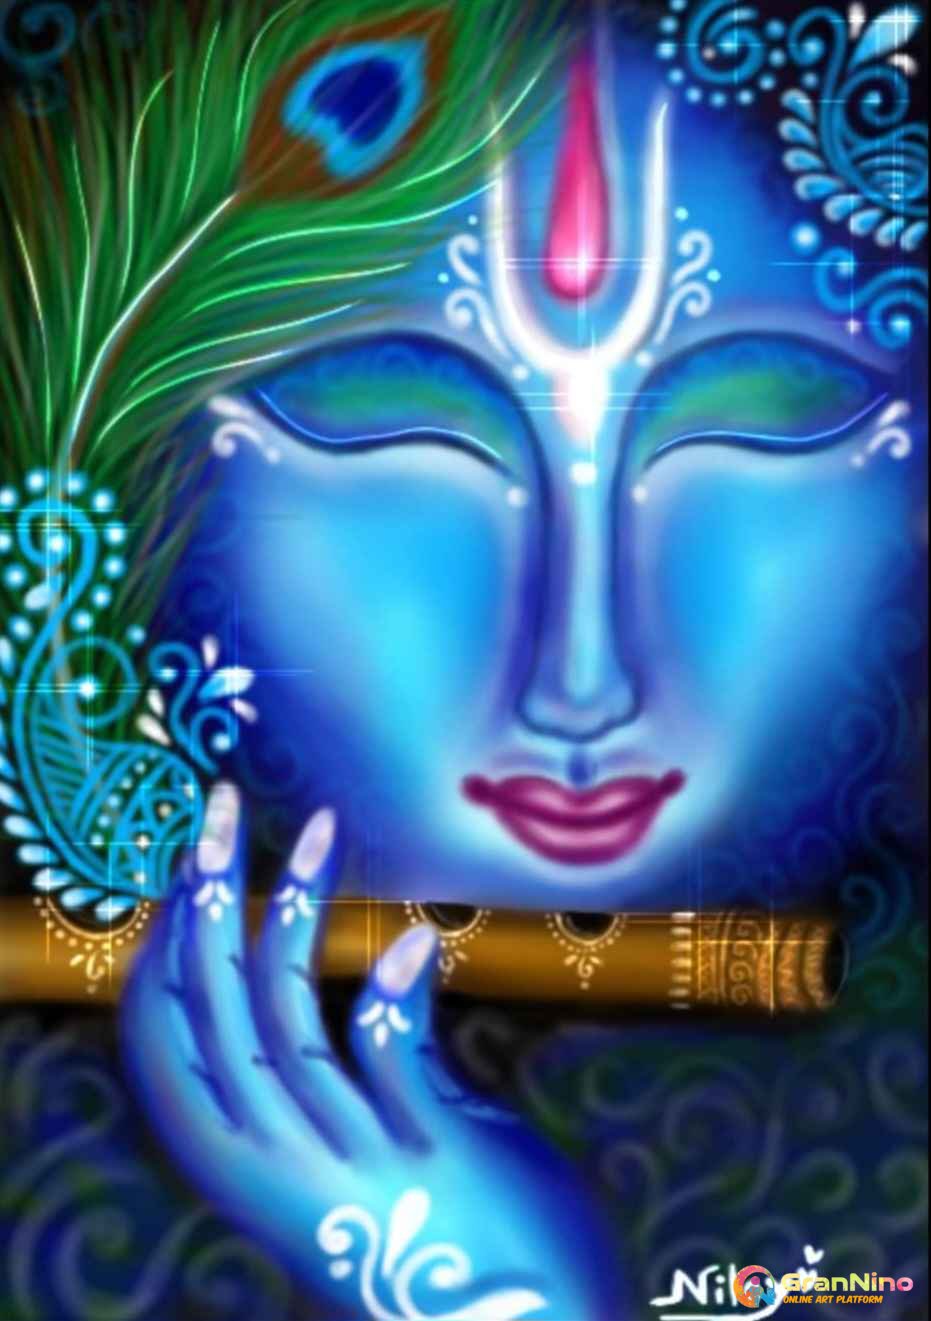 Painting Of Krishna In Digital Art Size 30cm Sq Cm Price